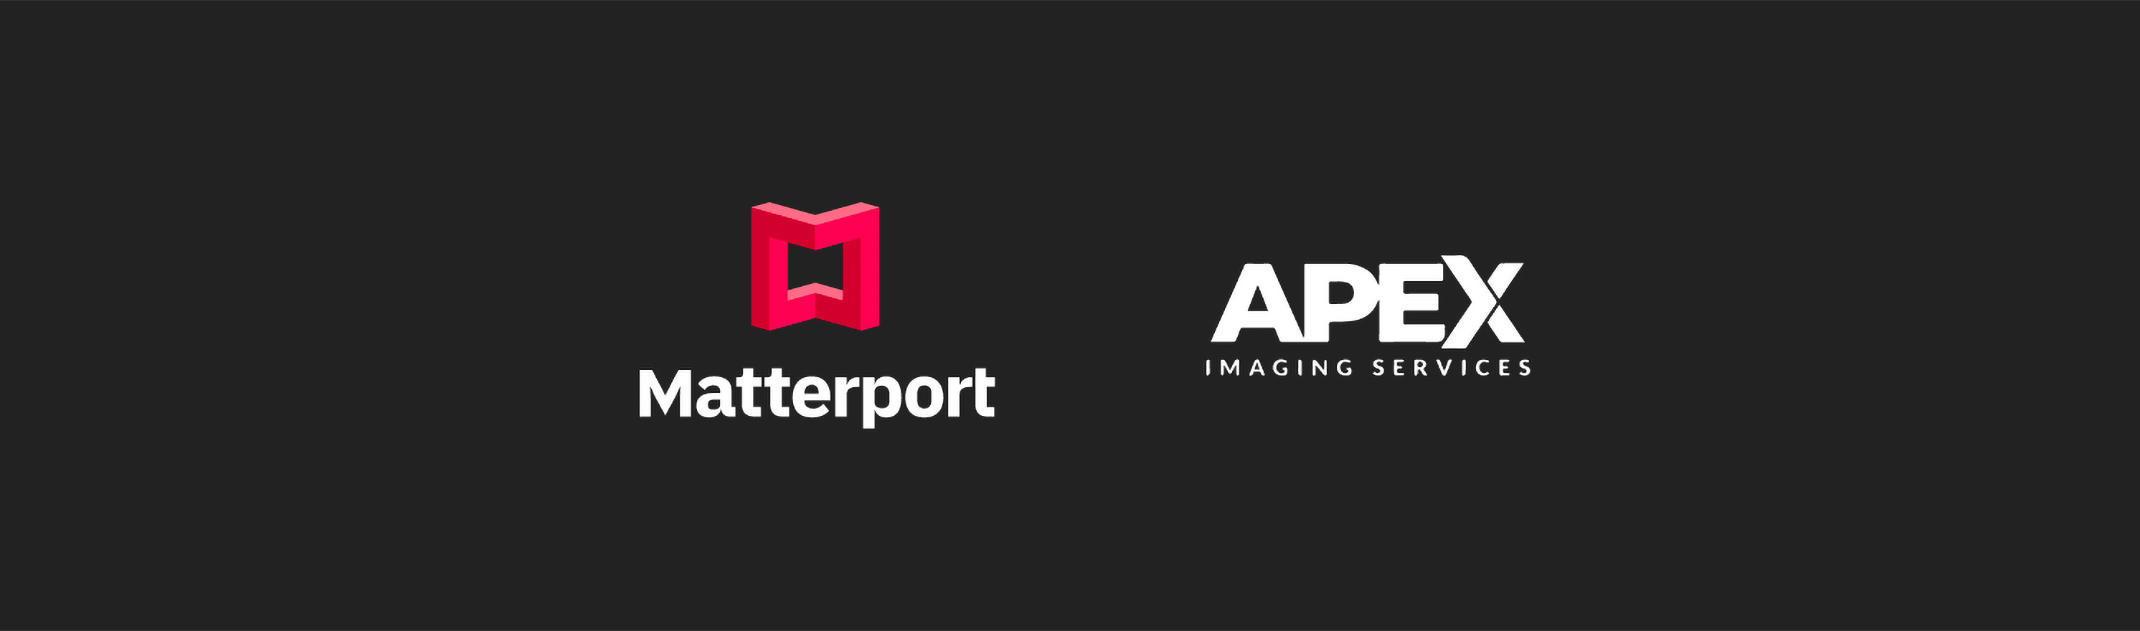 Matterport and Apex logos